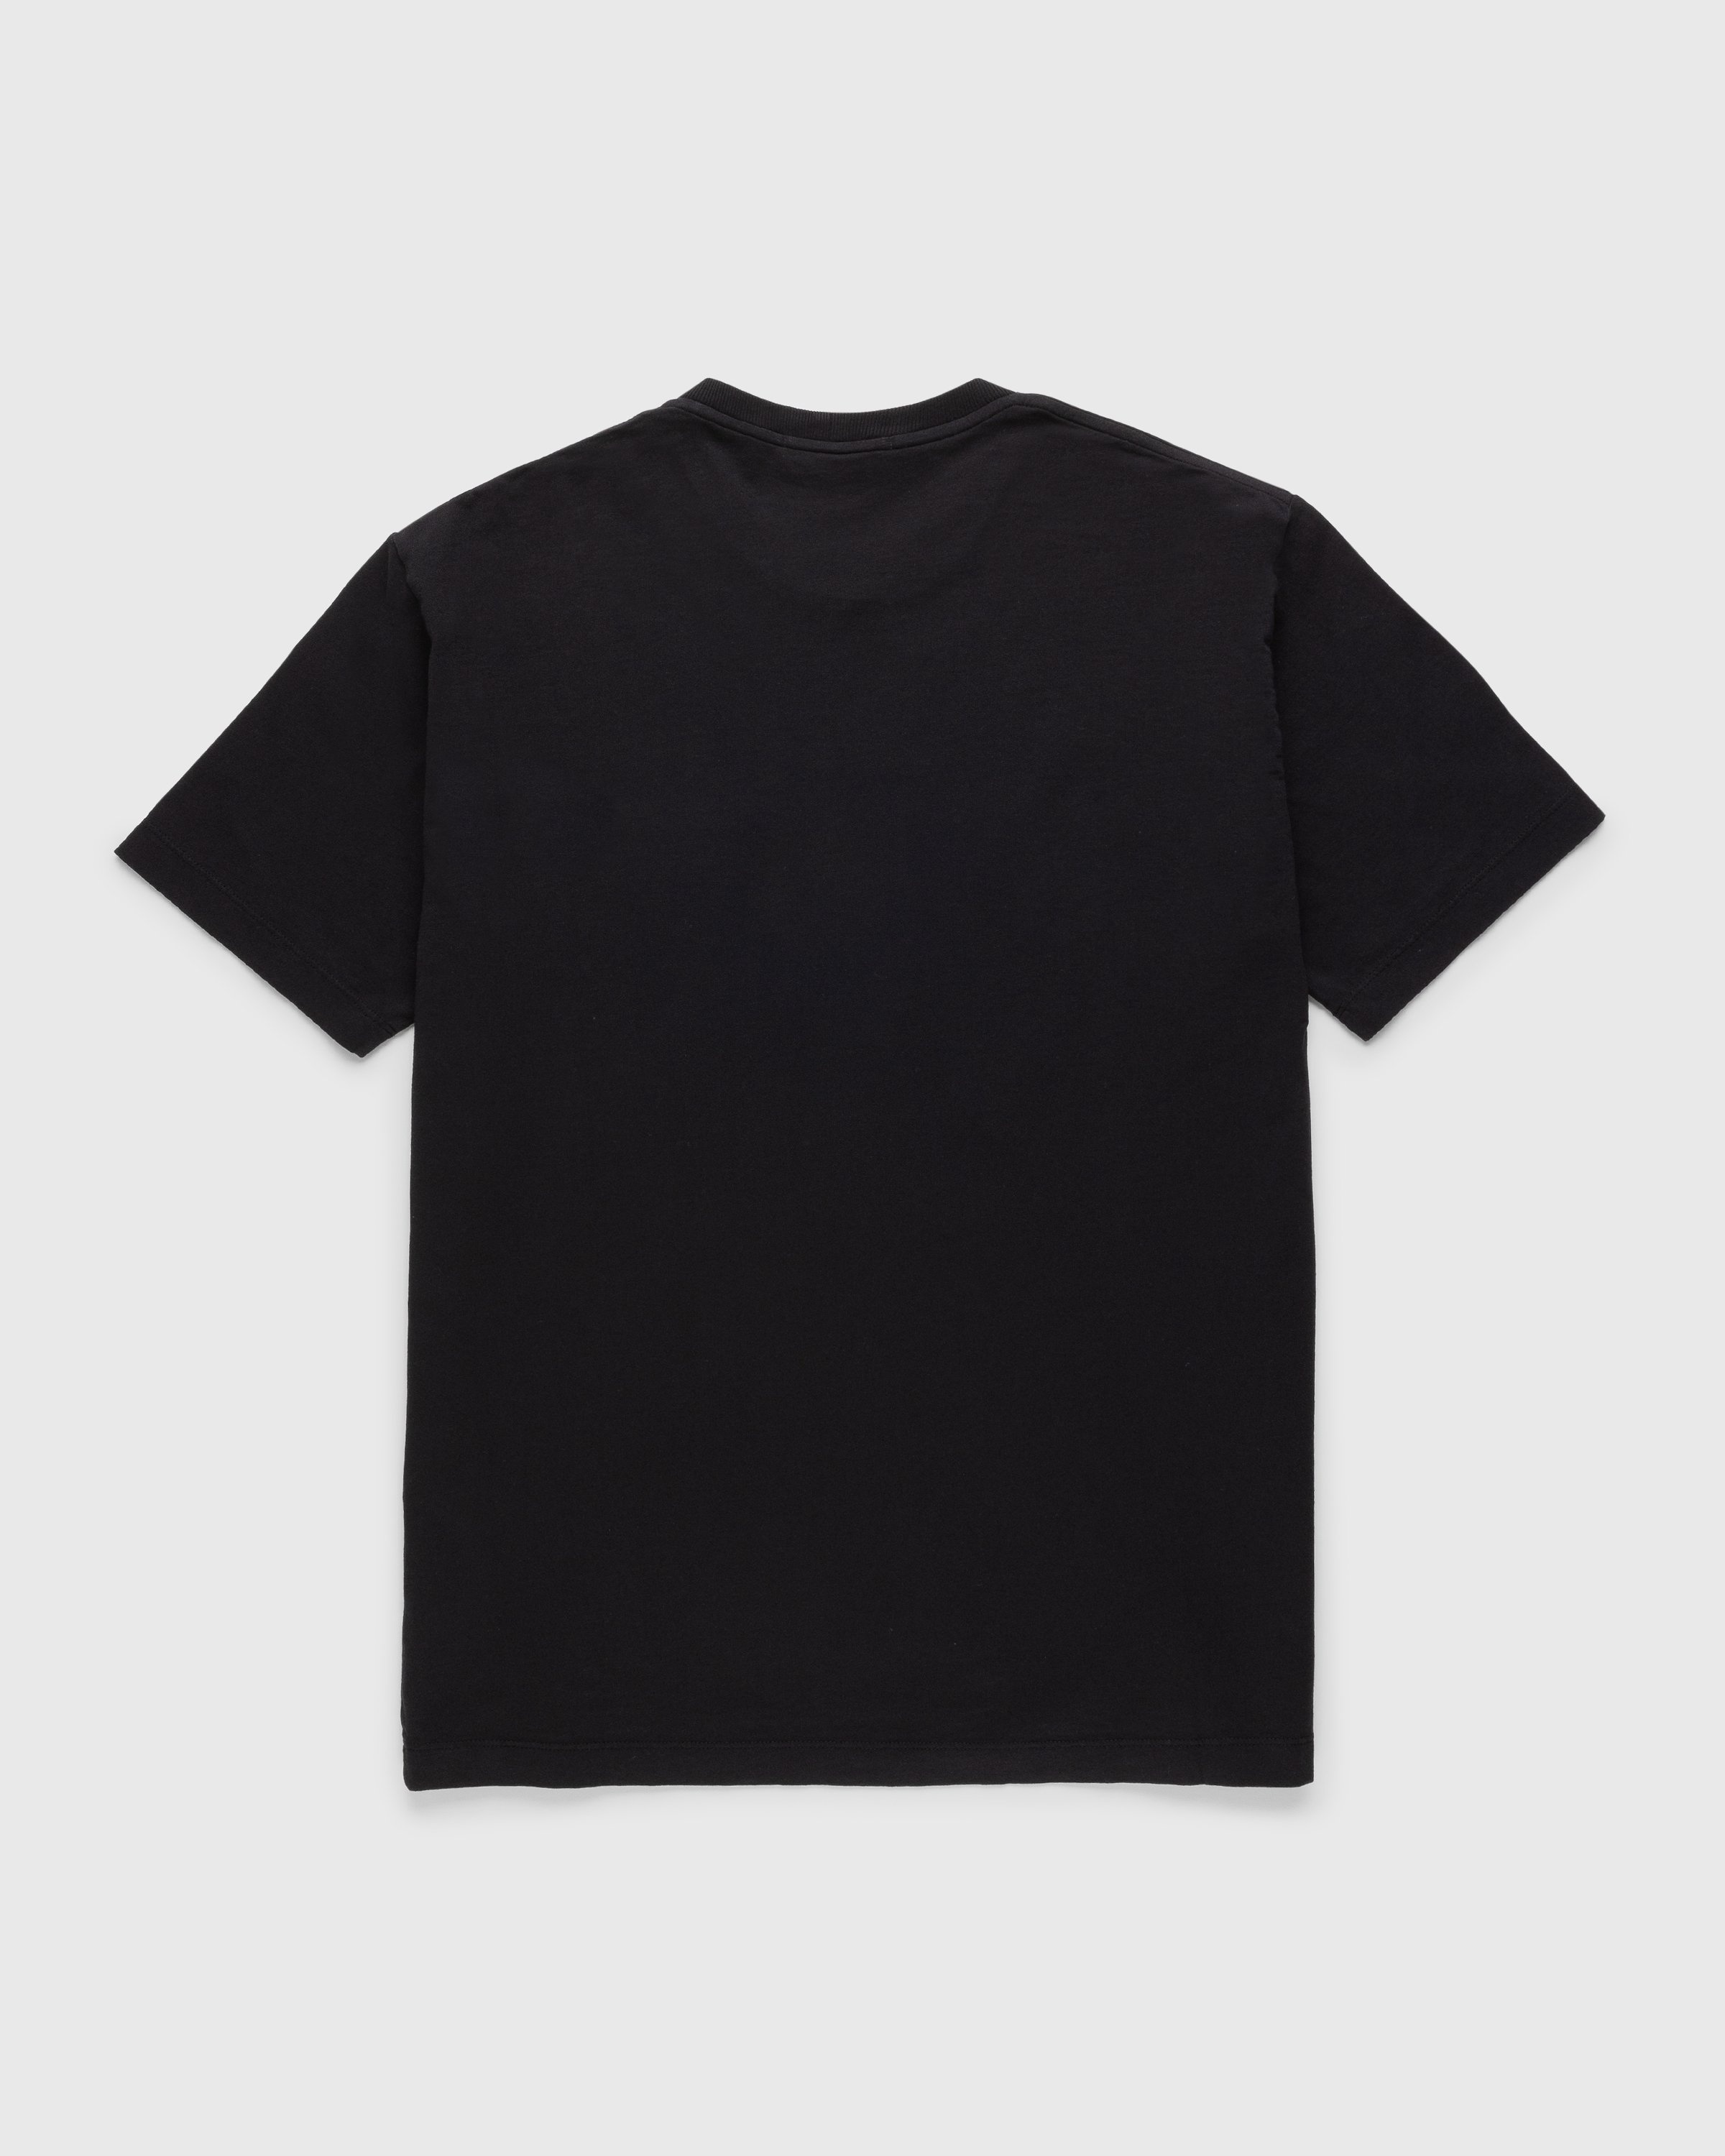 Stone Island – Compass Logo T-Shirt Black - T-shirts - Black - Image 2